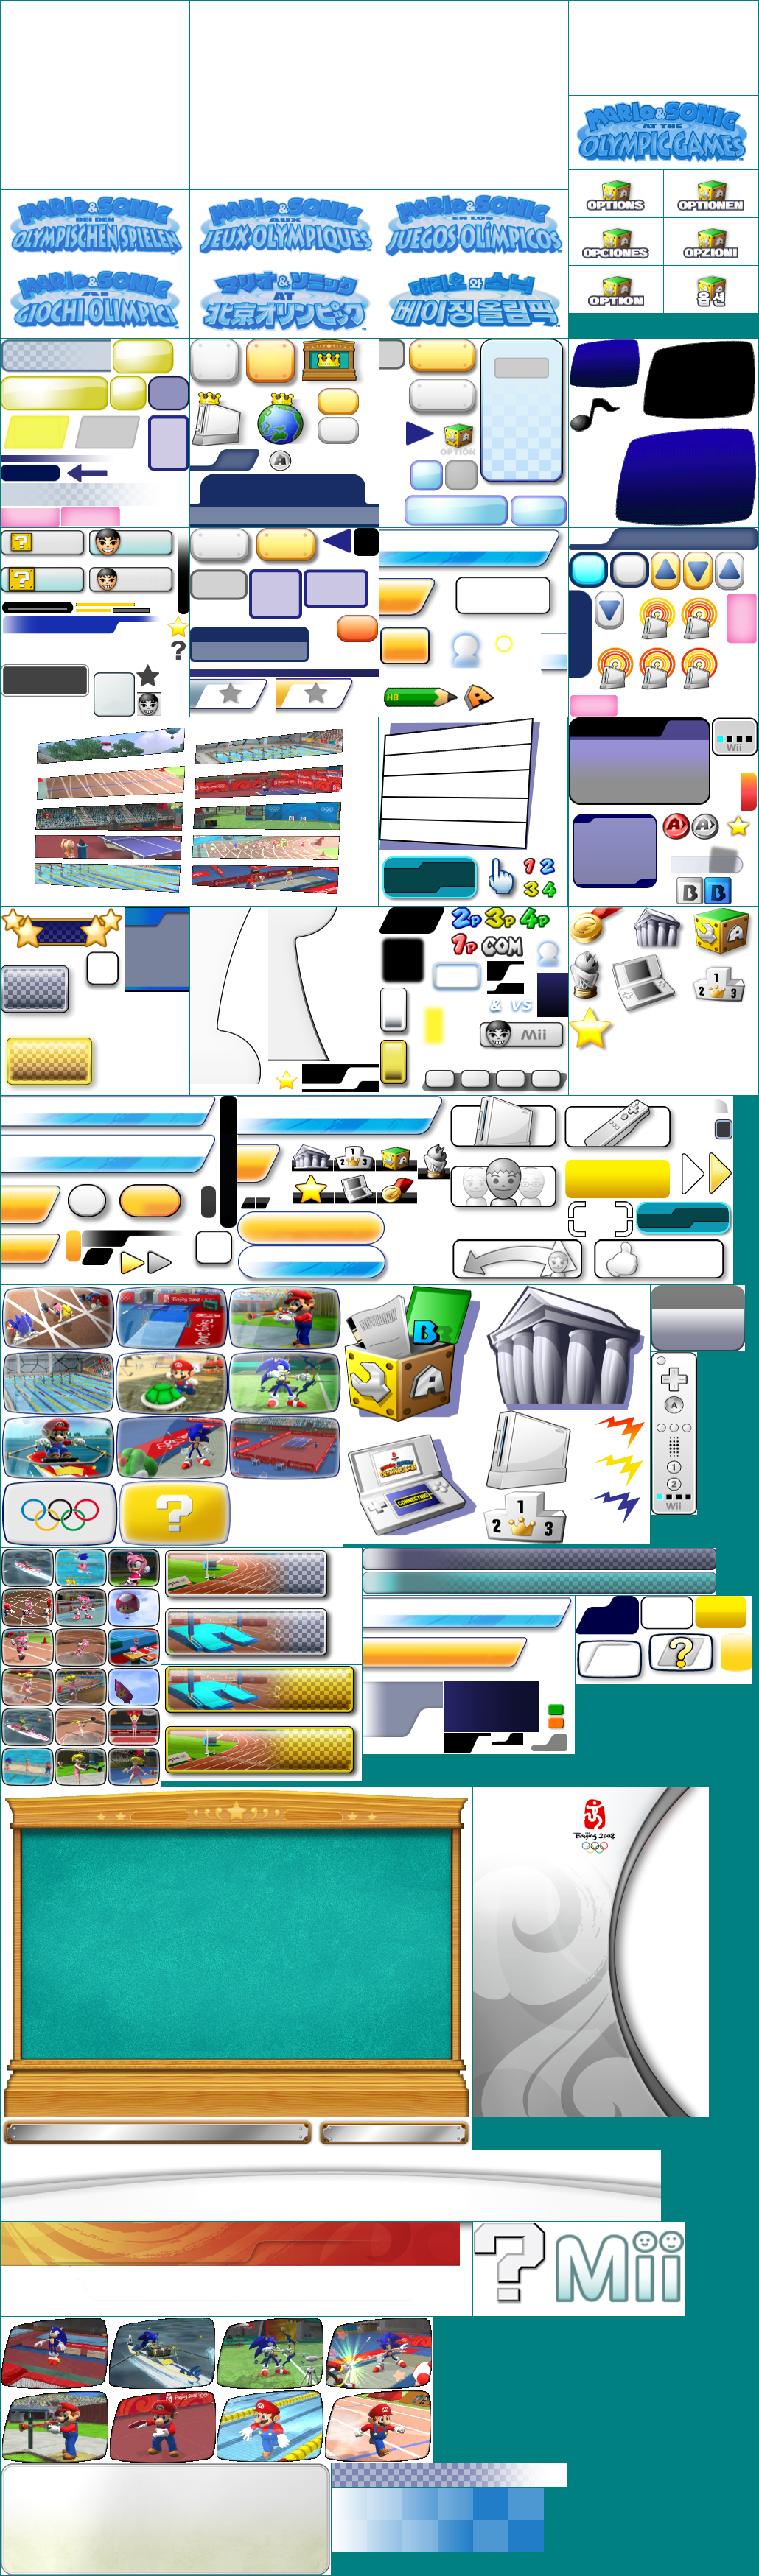 Mario & Sonic at the Olympic Games - Menus